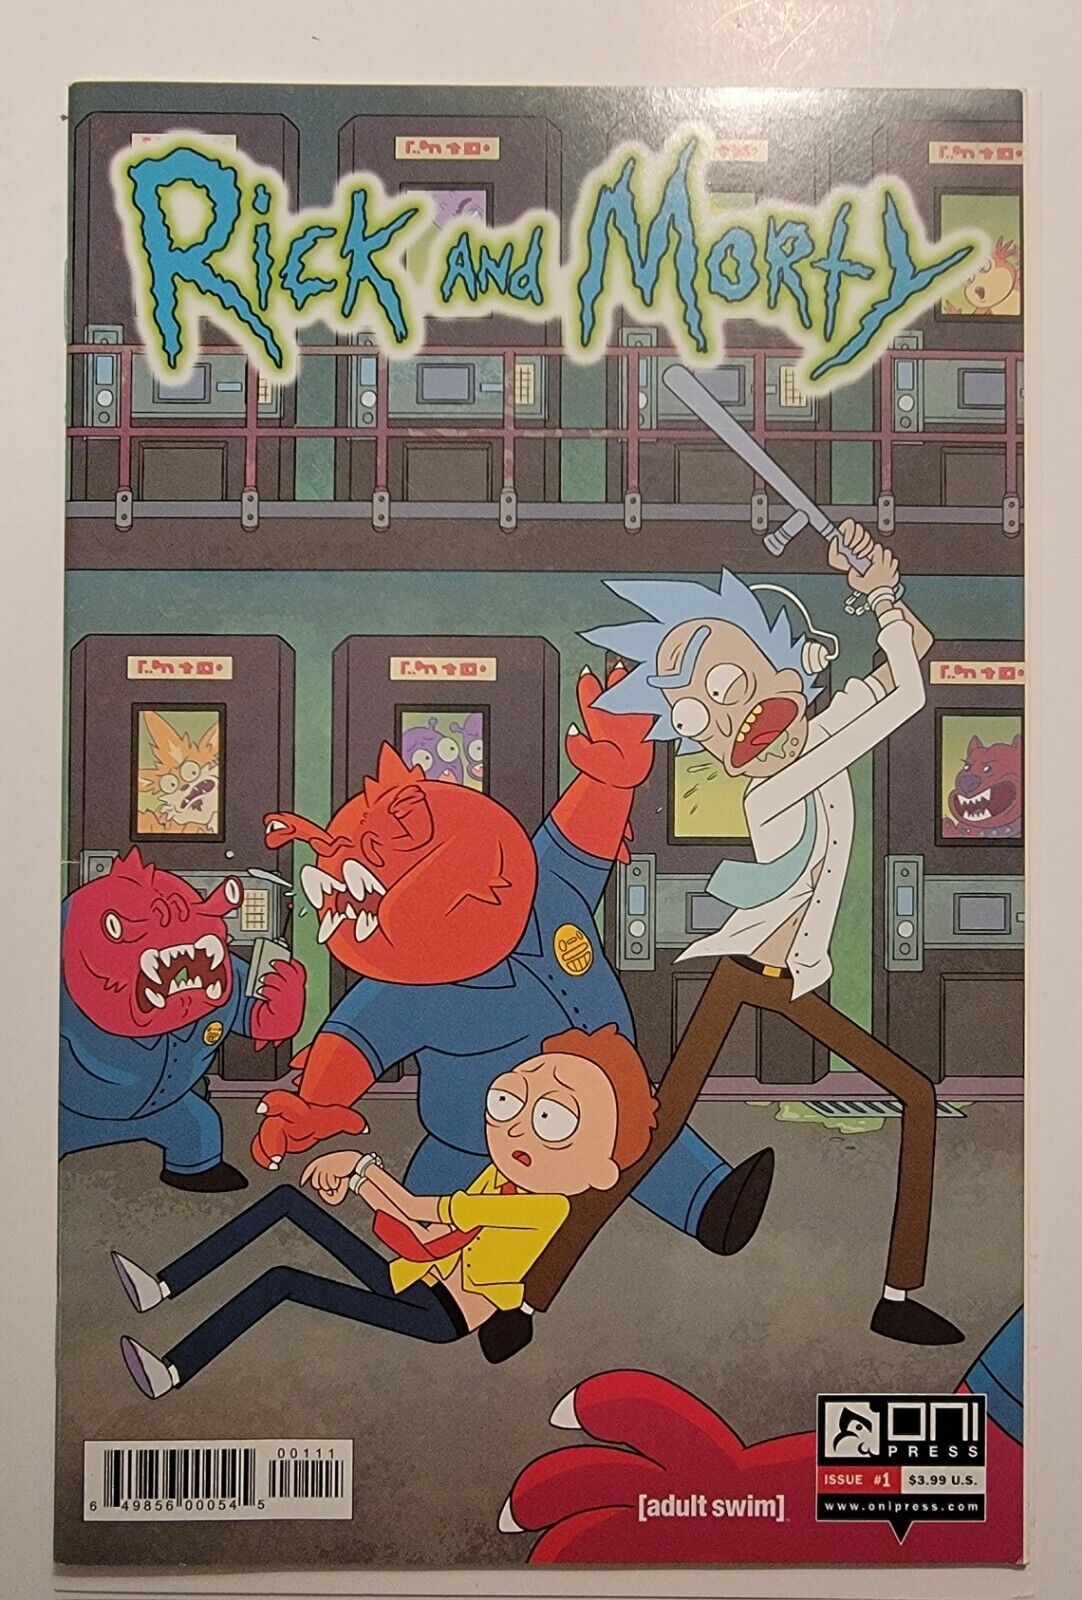 Rick and Morty #1 VF Cover A (Oni Press 2015) 1st App. Zac Gorman ~ High Grade 